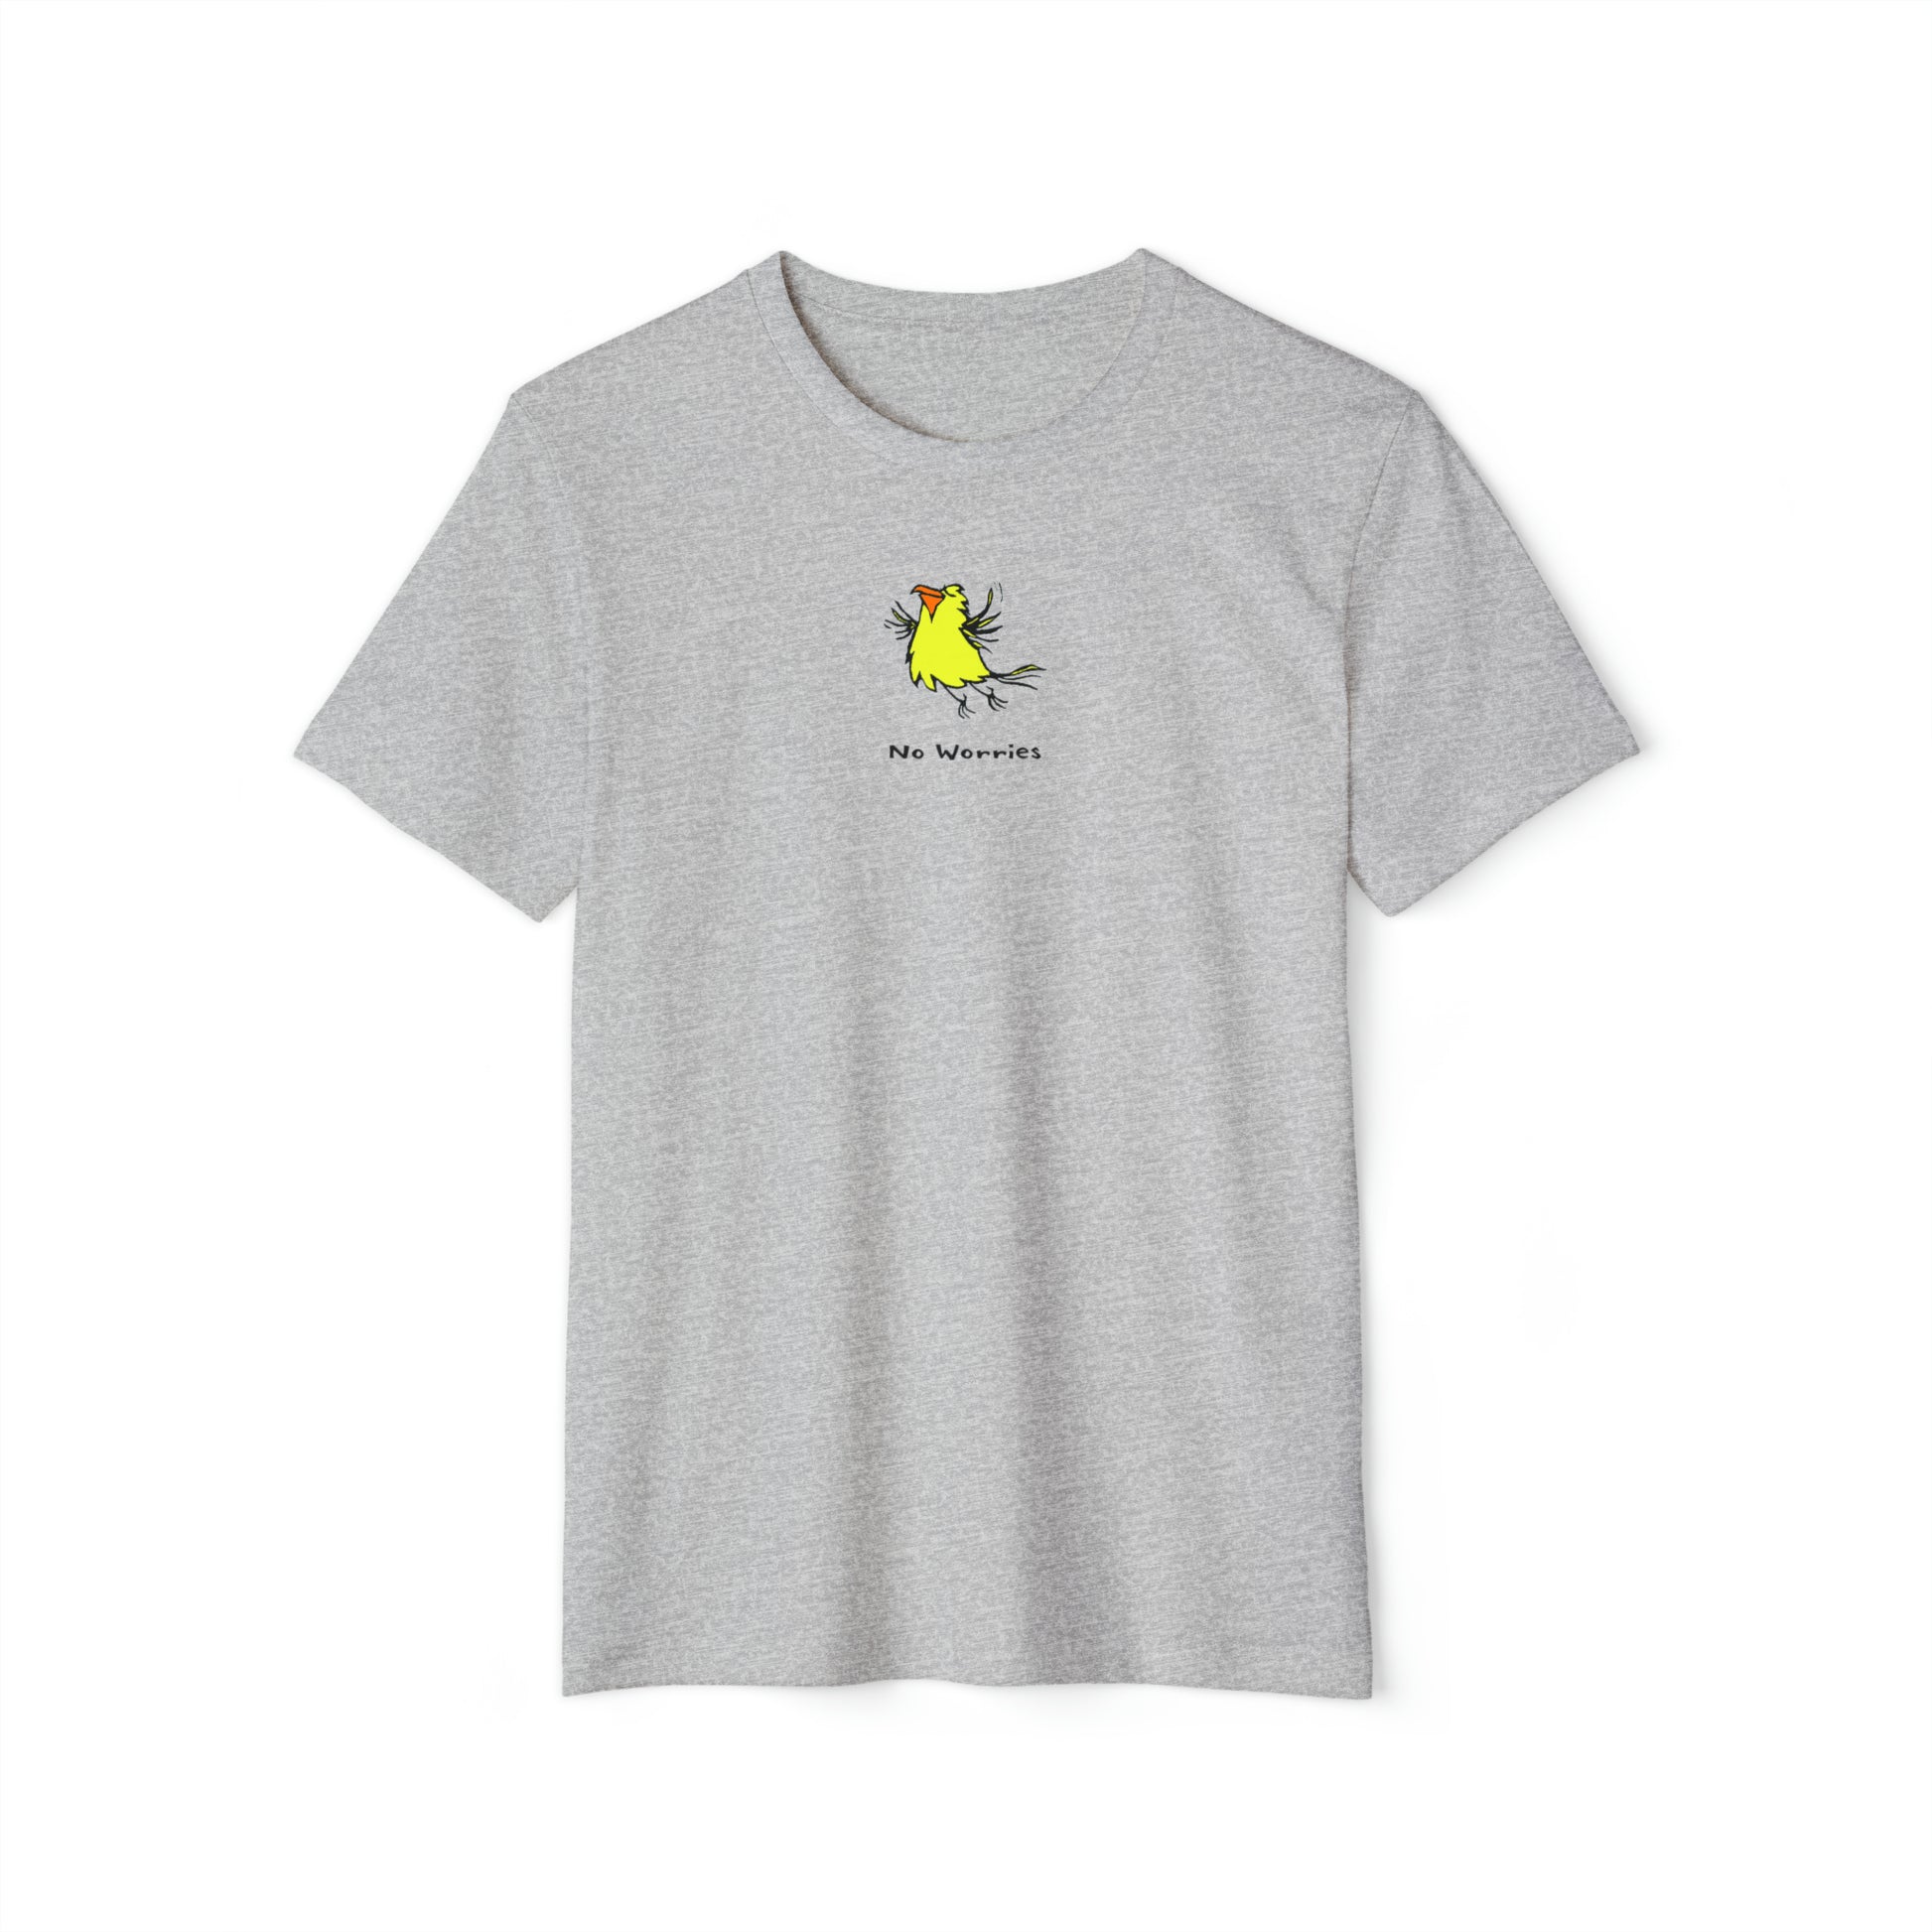 Yellow flying bird with orange beak on athletic heather grey color unisex men's t-shirt. Text under image says No Worries